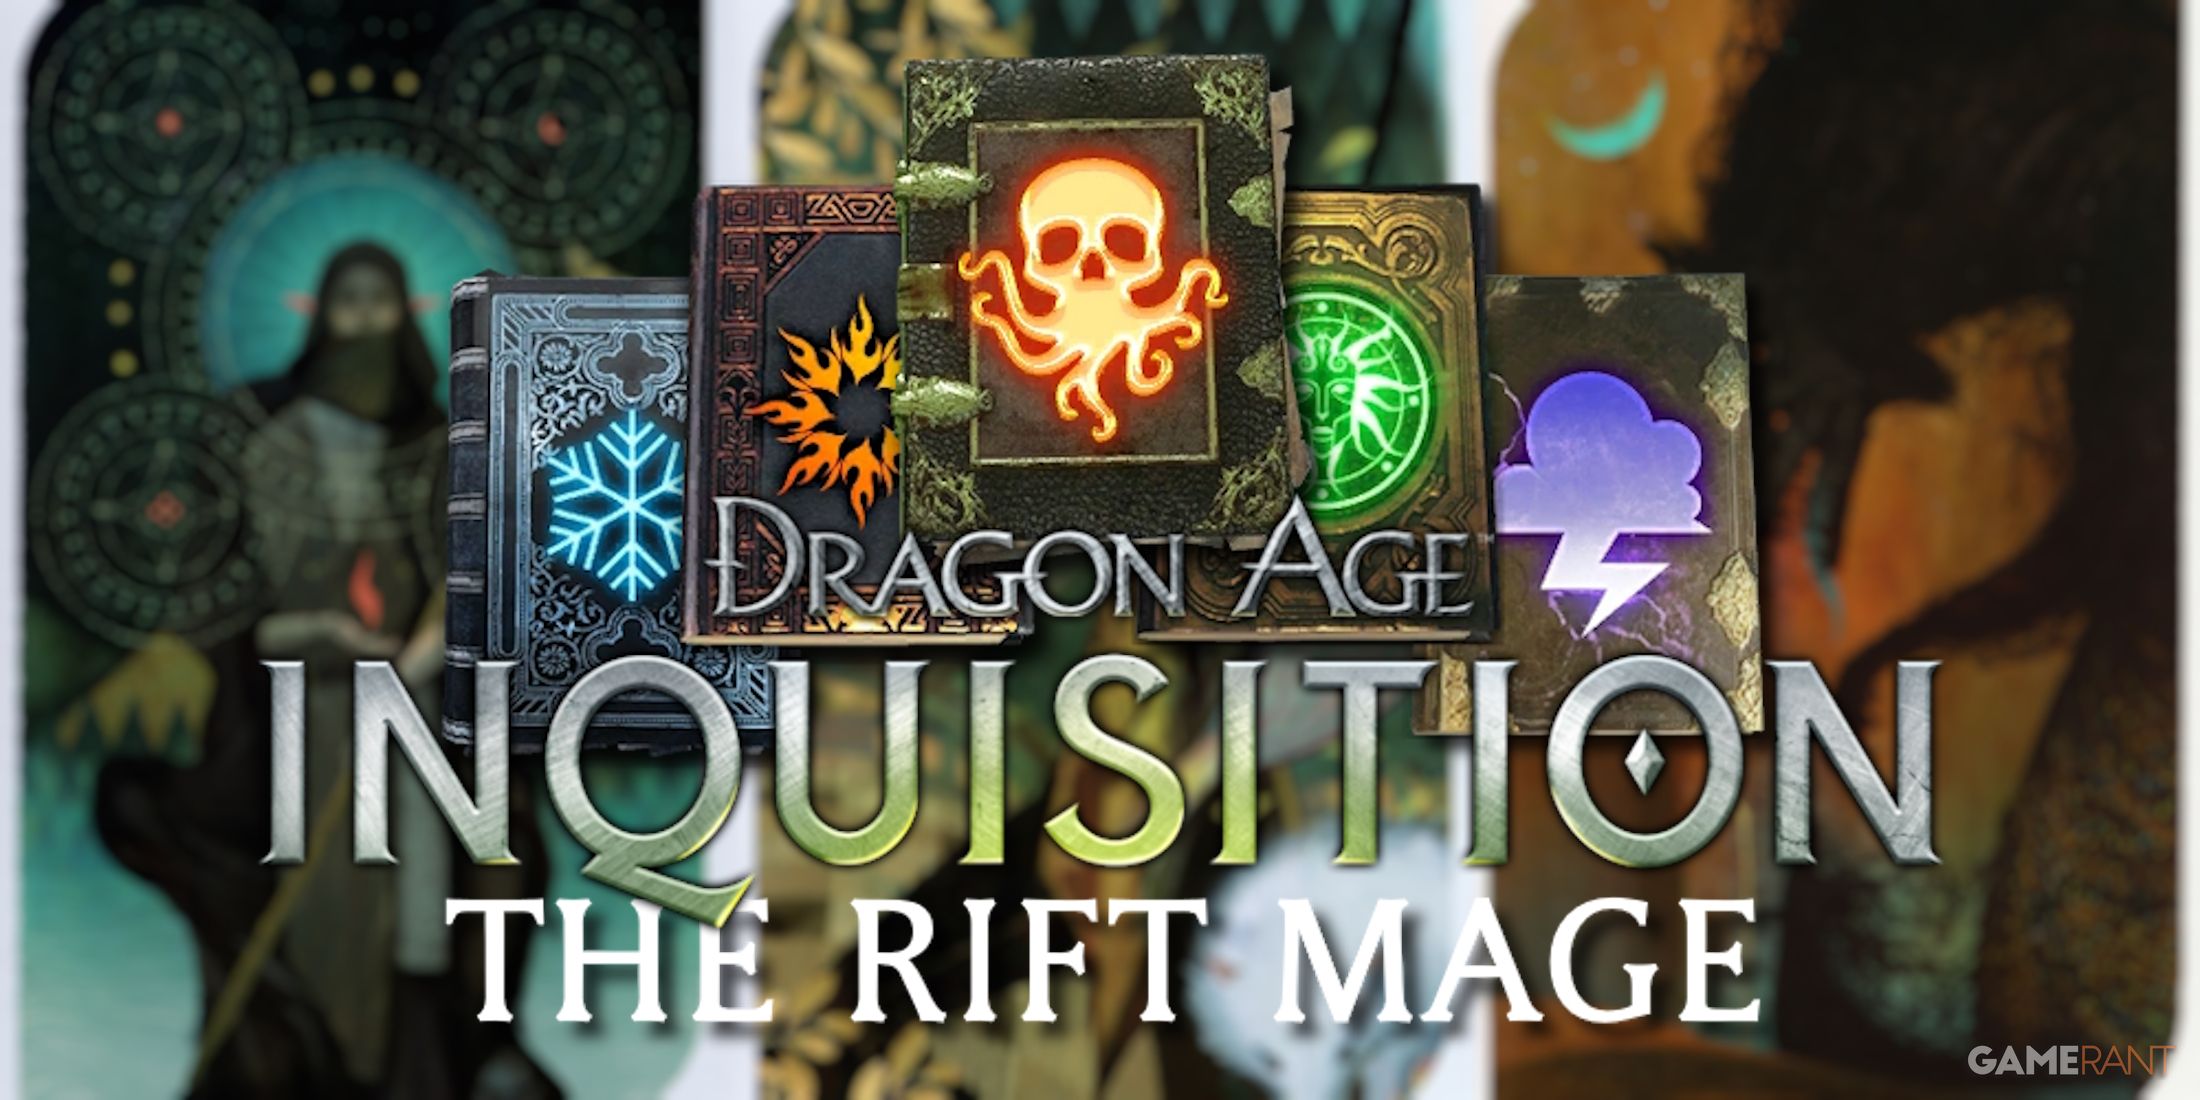 dragon age inquision logo solas tarot background rift mage build